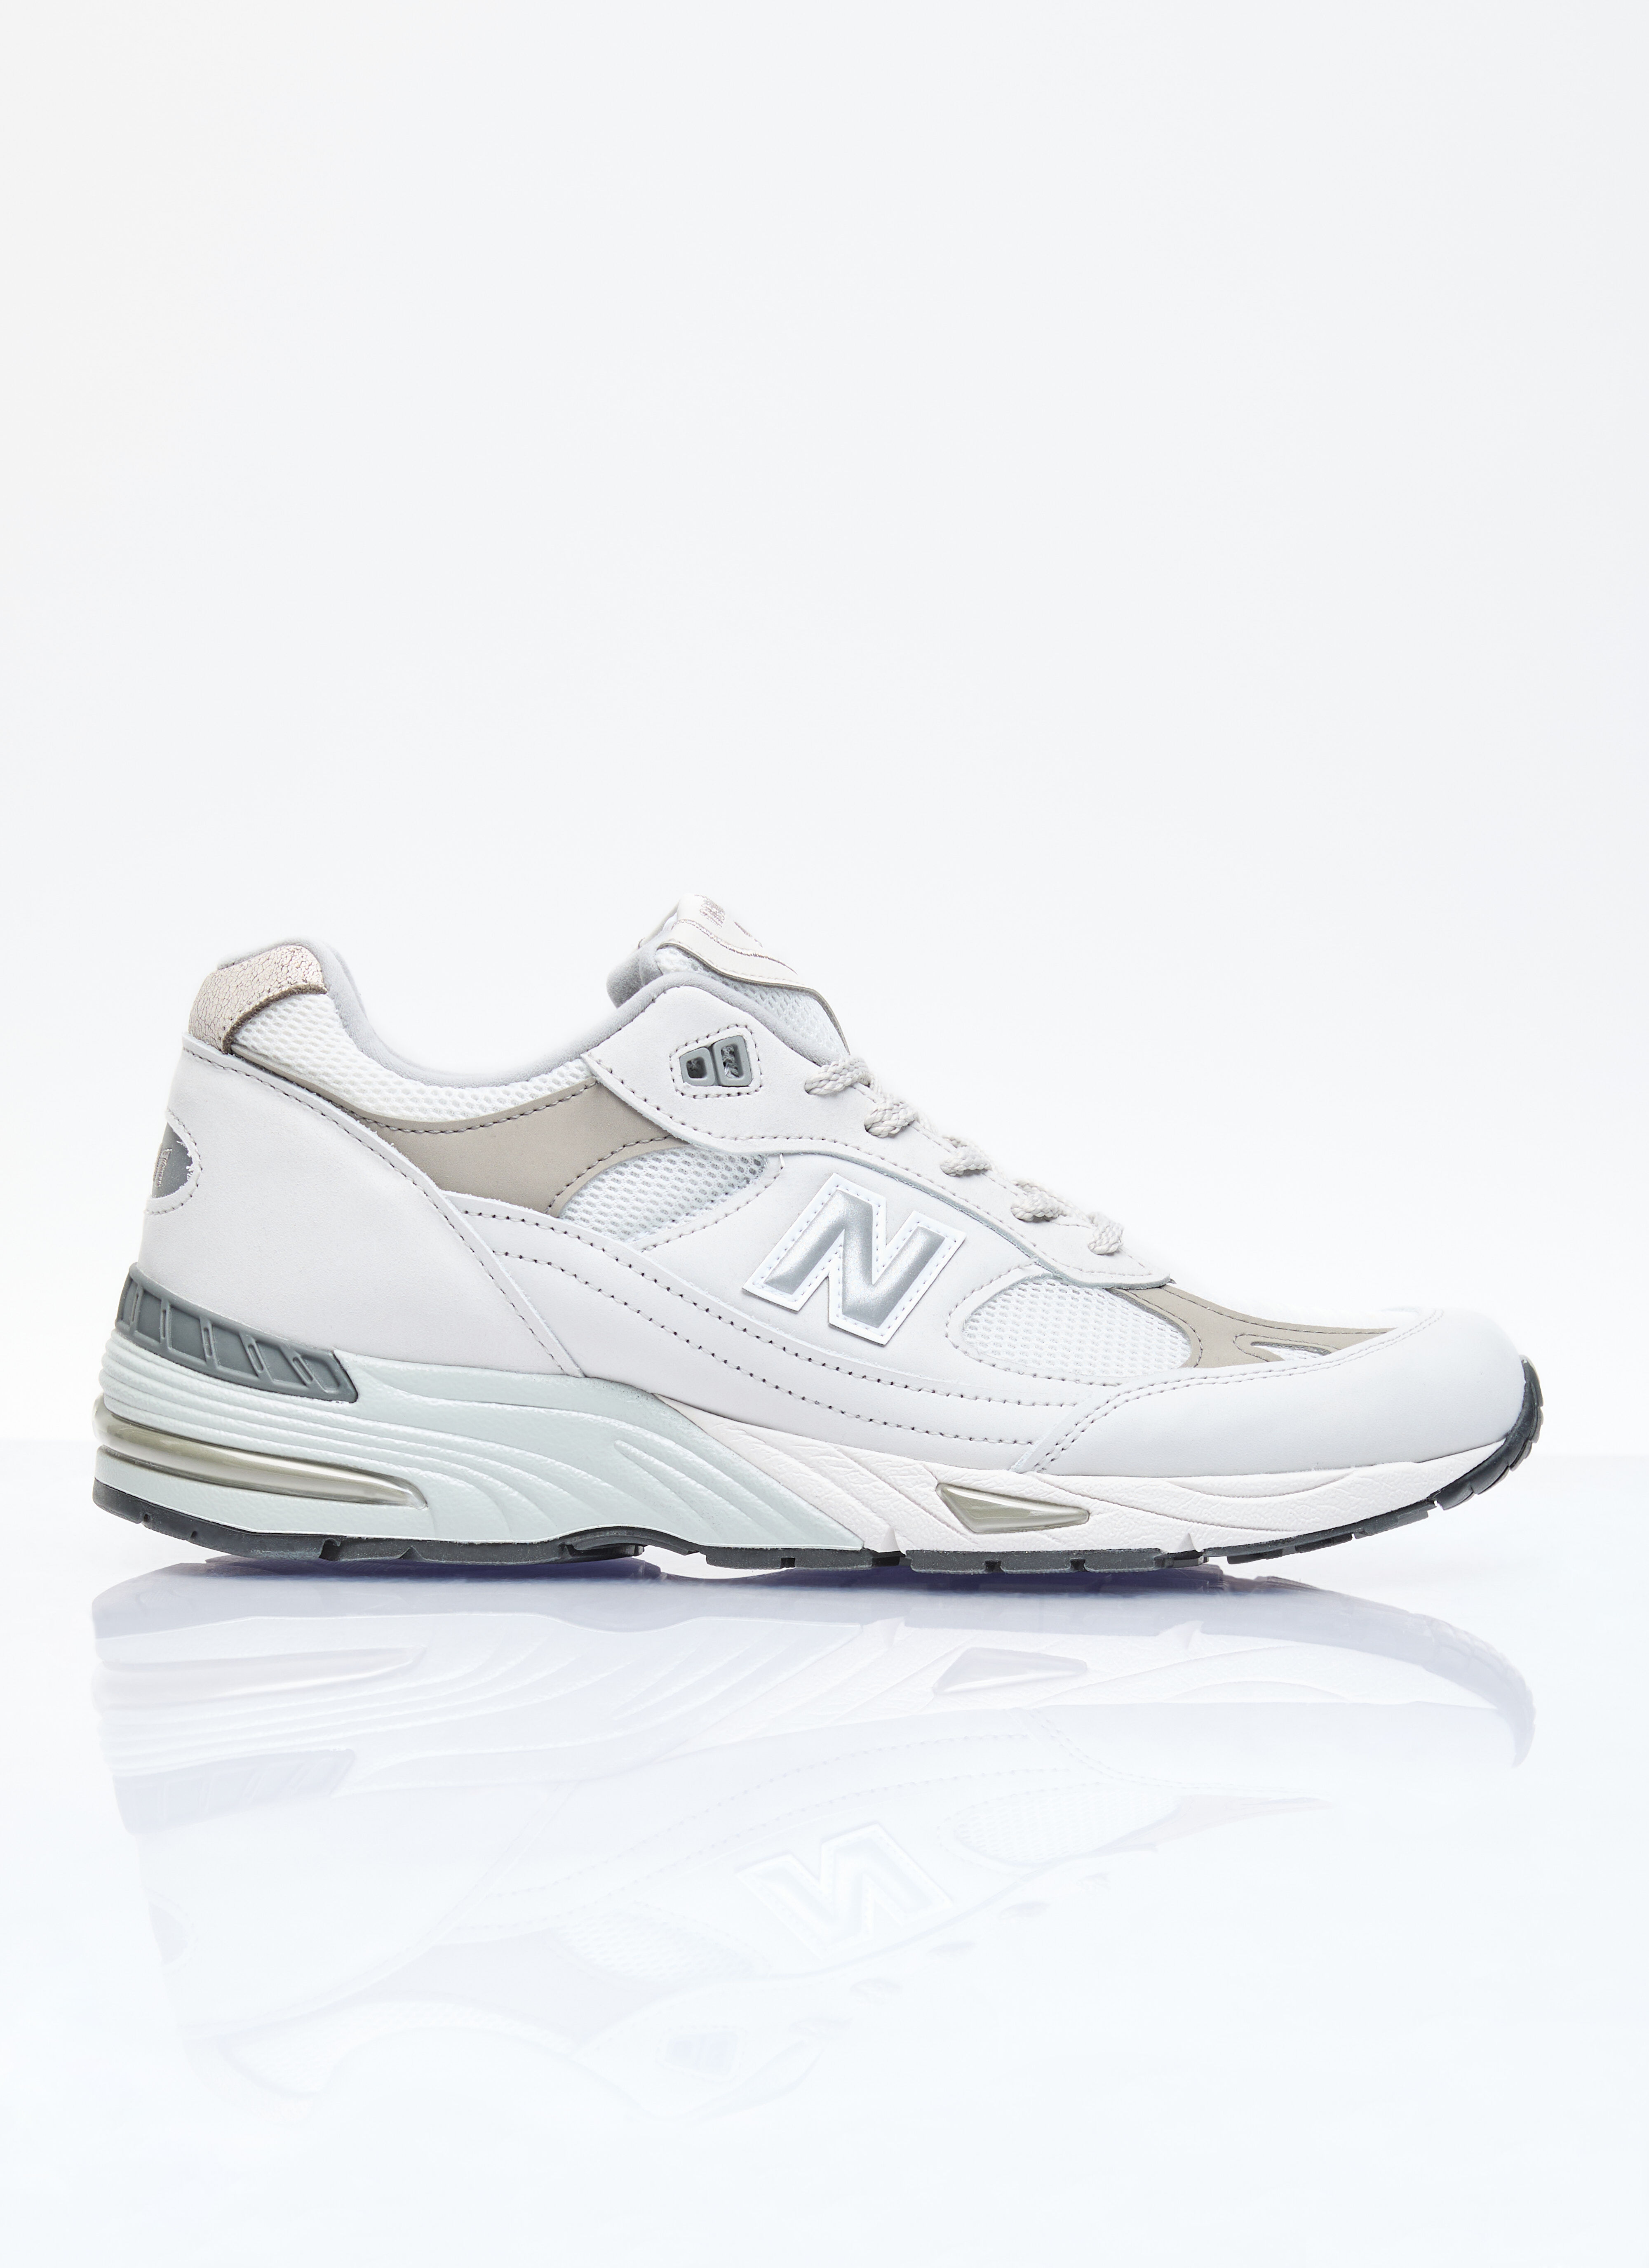 New Balance 991 运动鞋 白色 new0156006